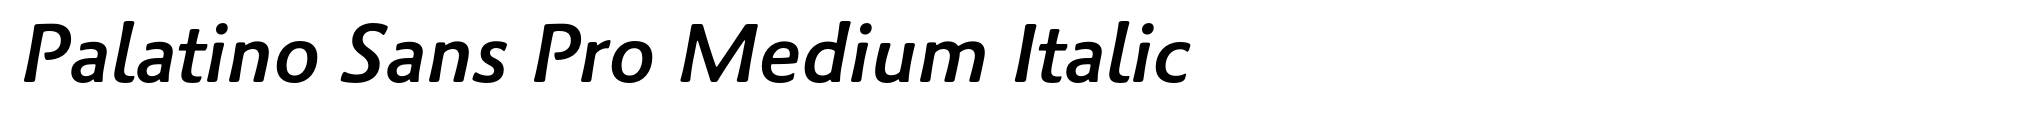 Palatino Sans Pro Medium Italic image